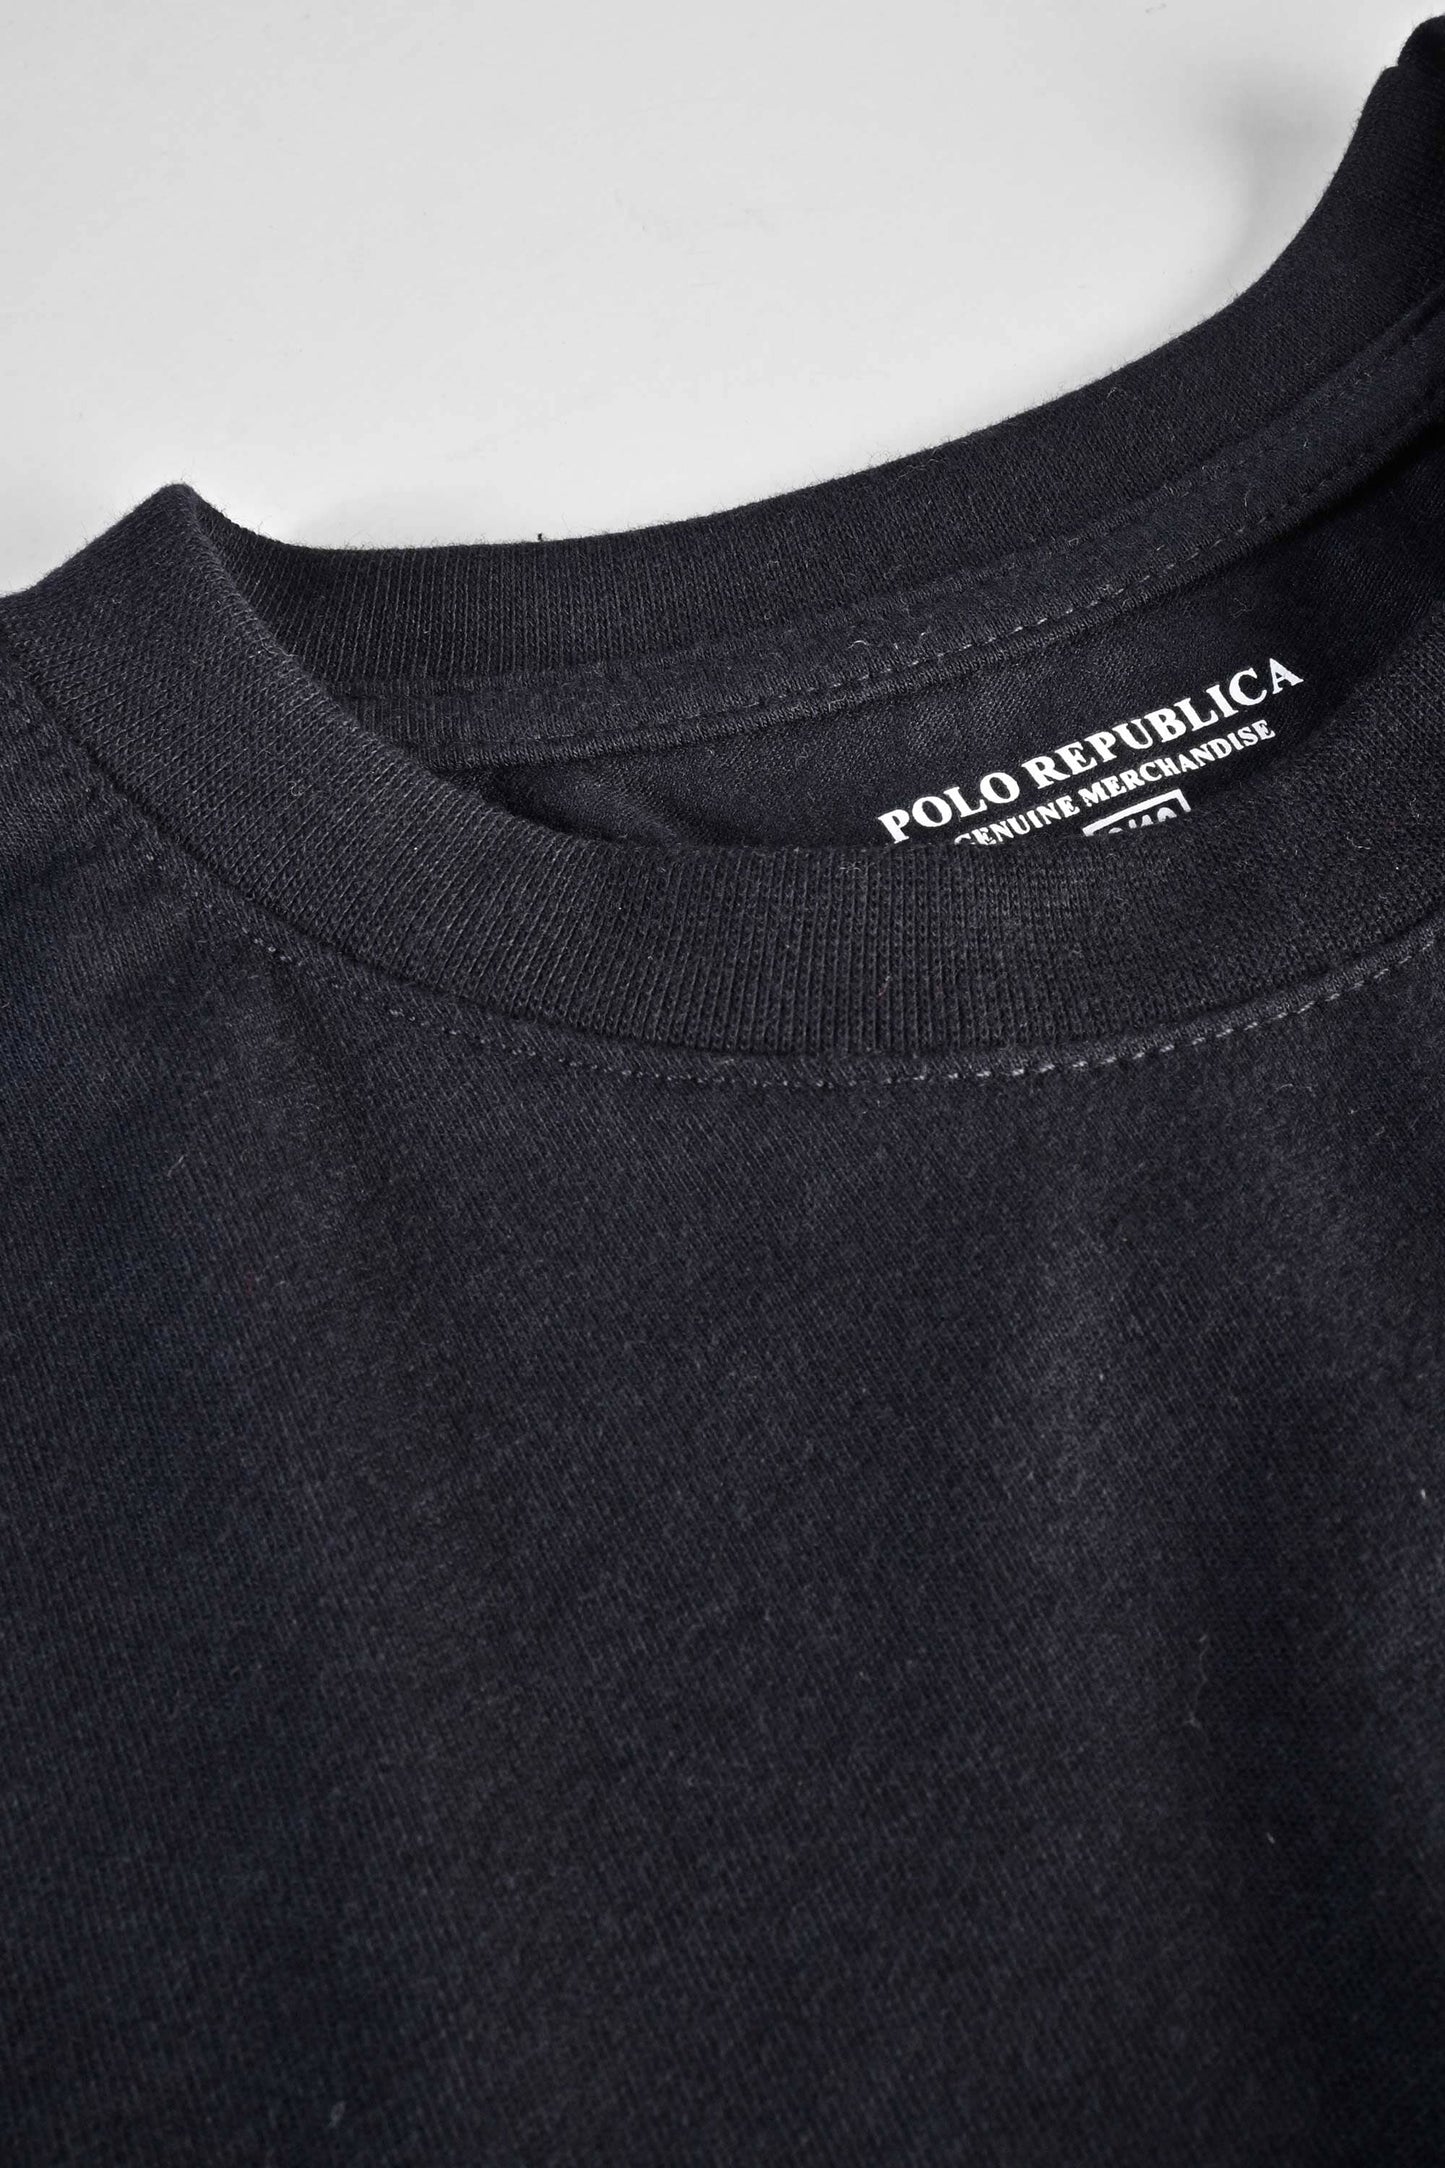 Polo Republica Boy's Astronaut Vespa Street Style Printed Tee Shirt Boy's Tee Shirt Polo Republica 